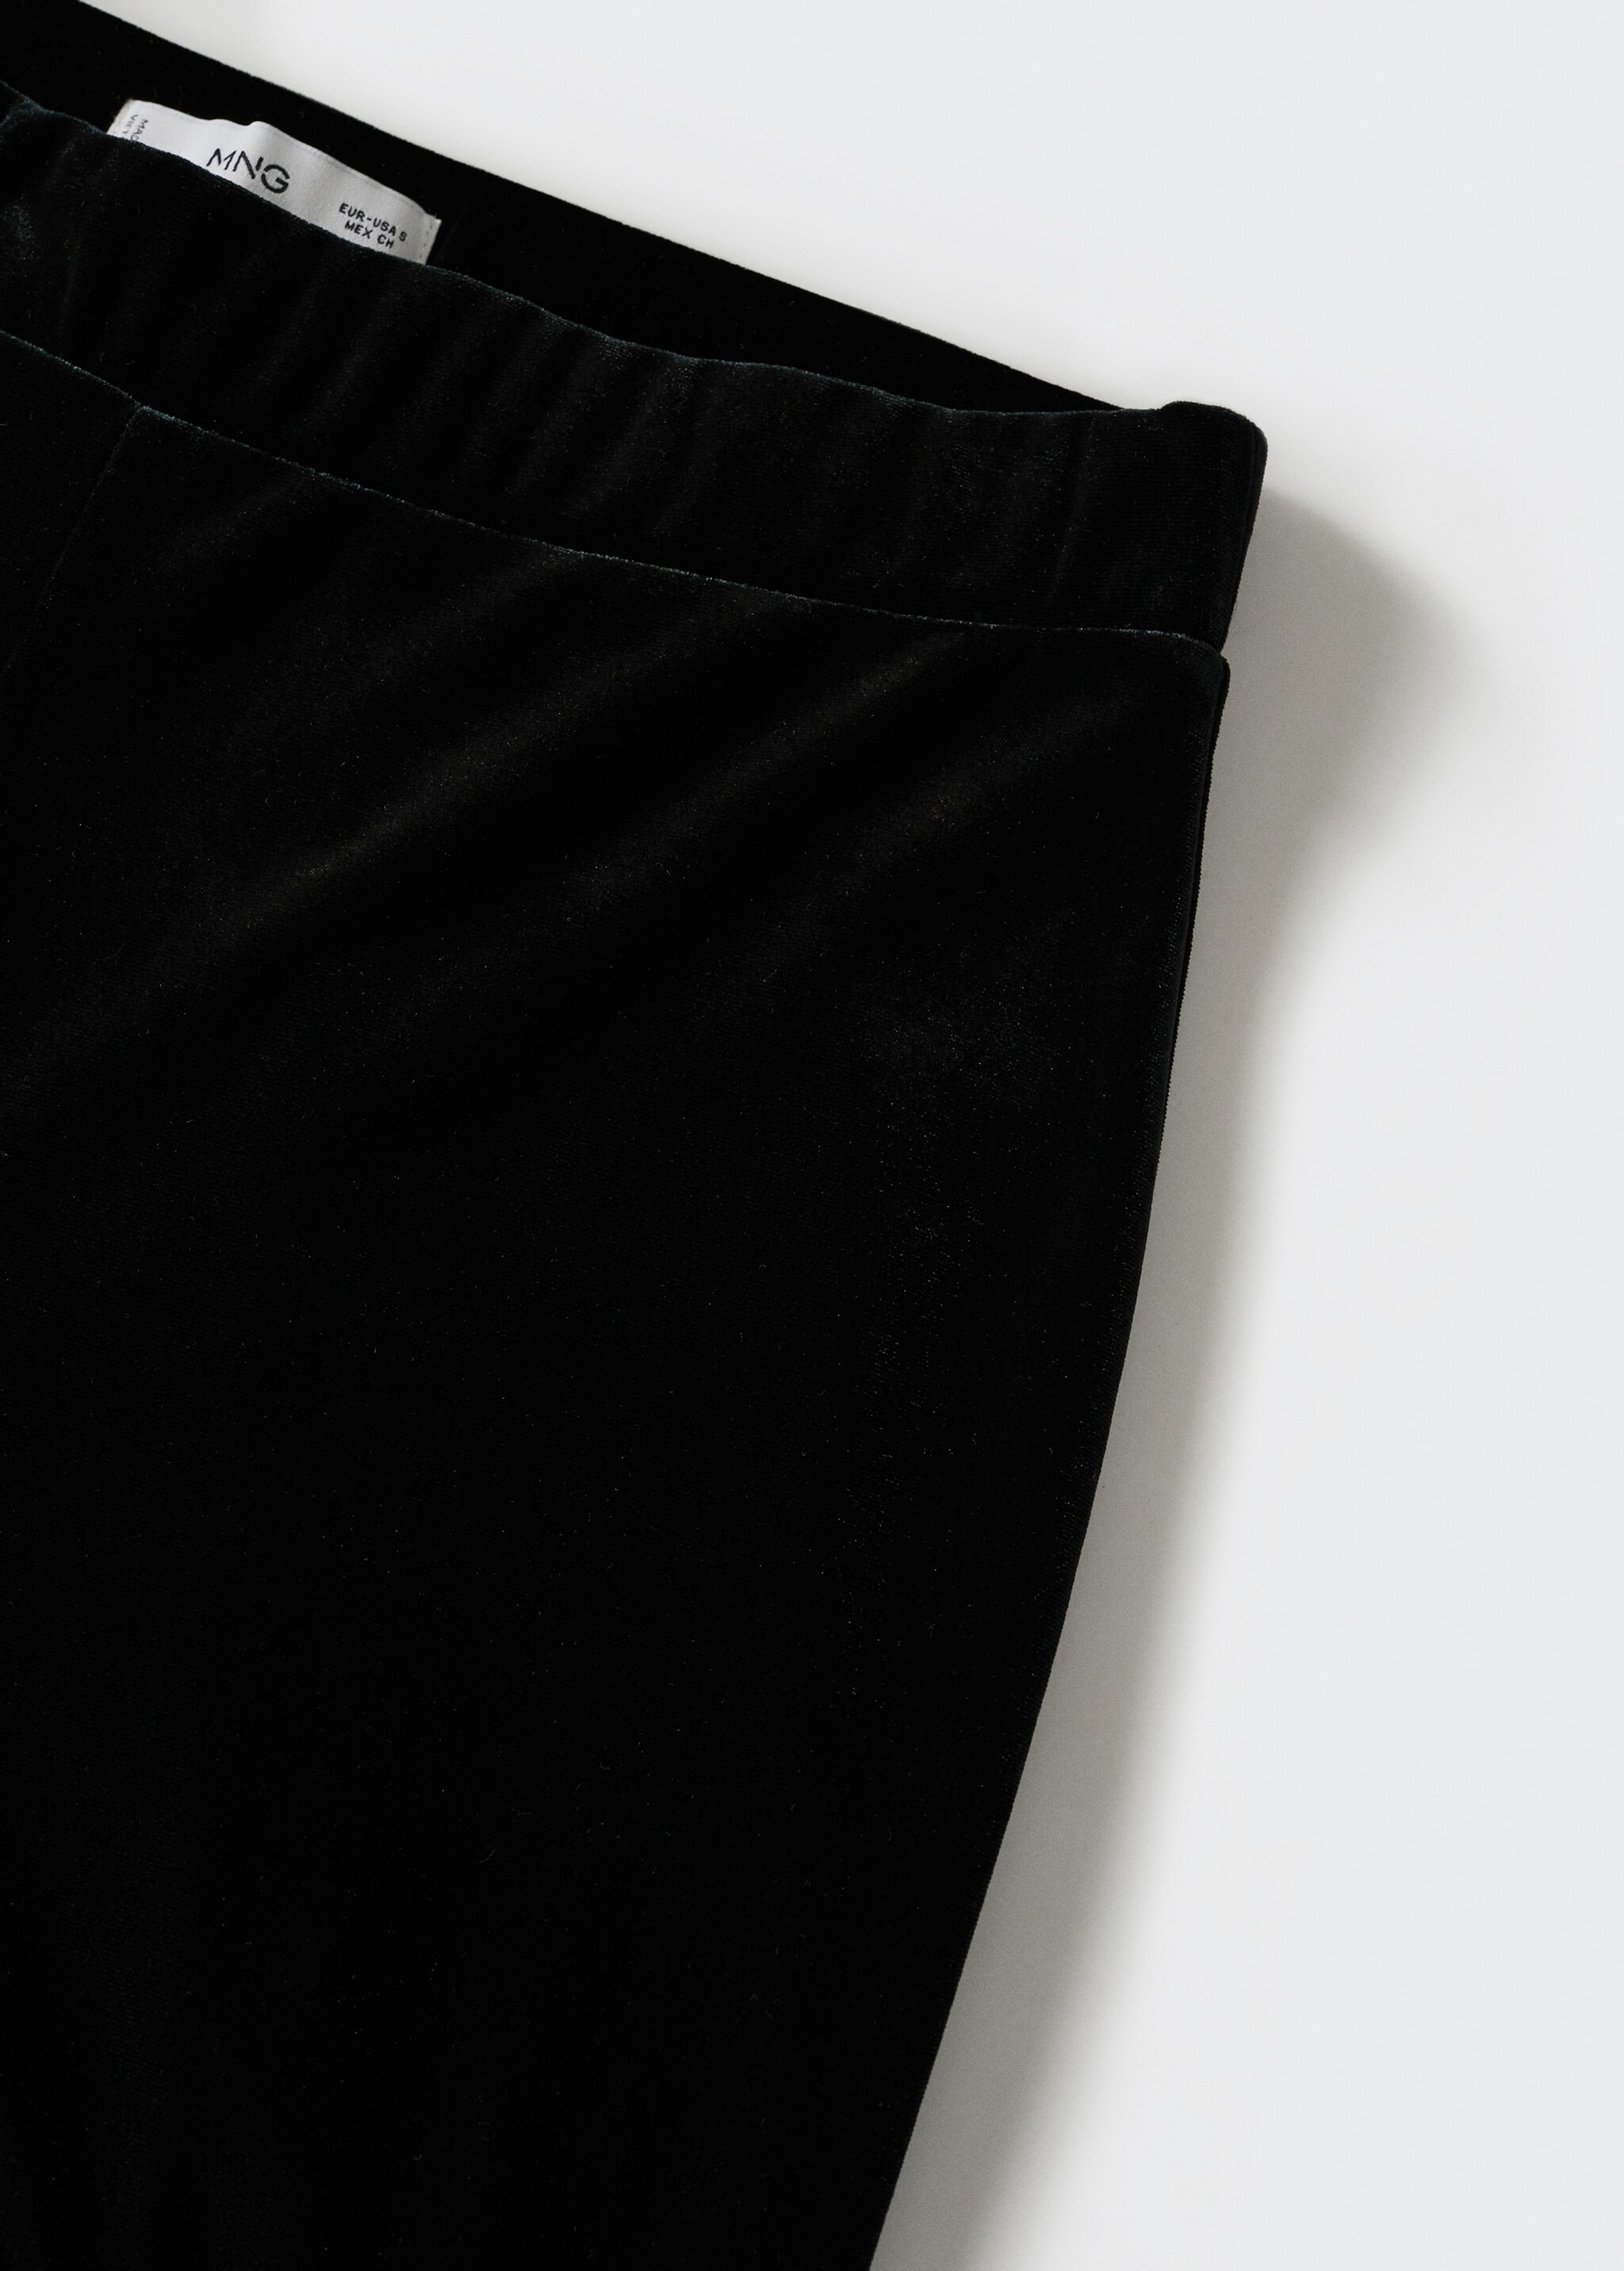 Velvet trousers - Details of the article 8